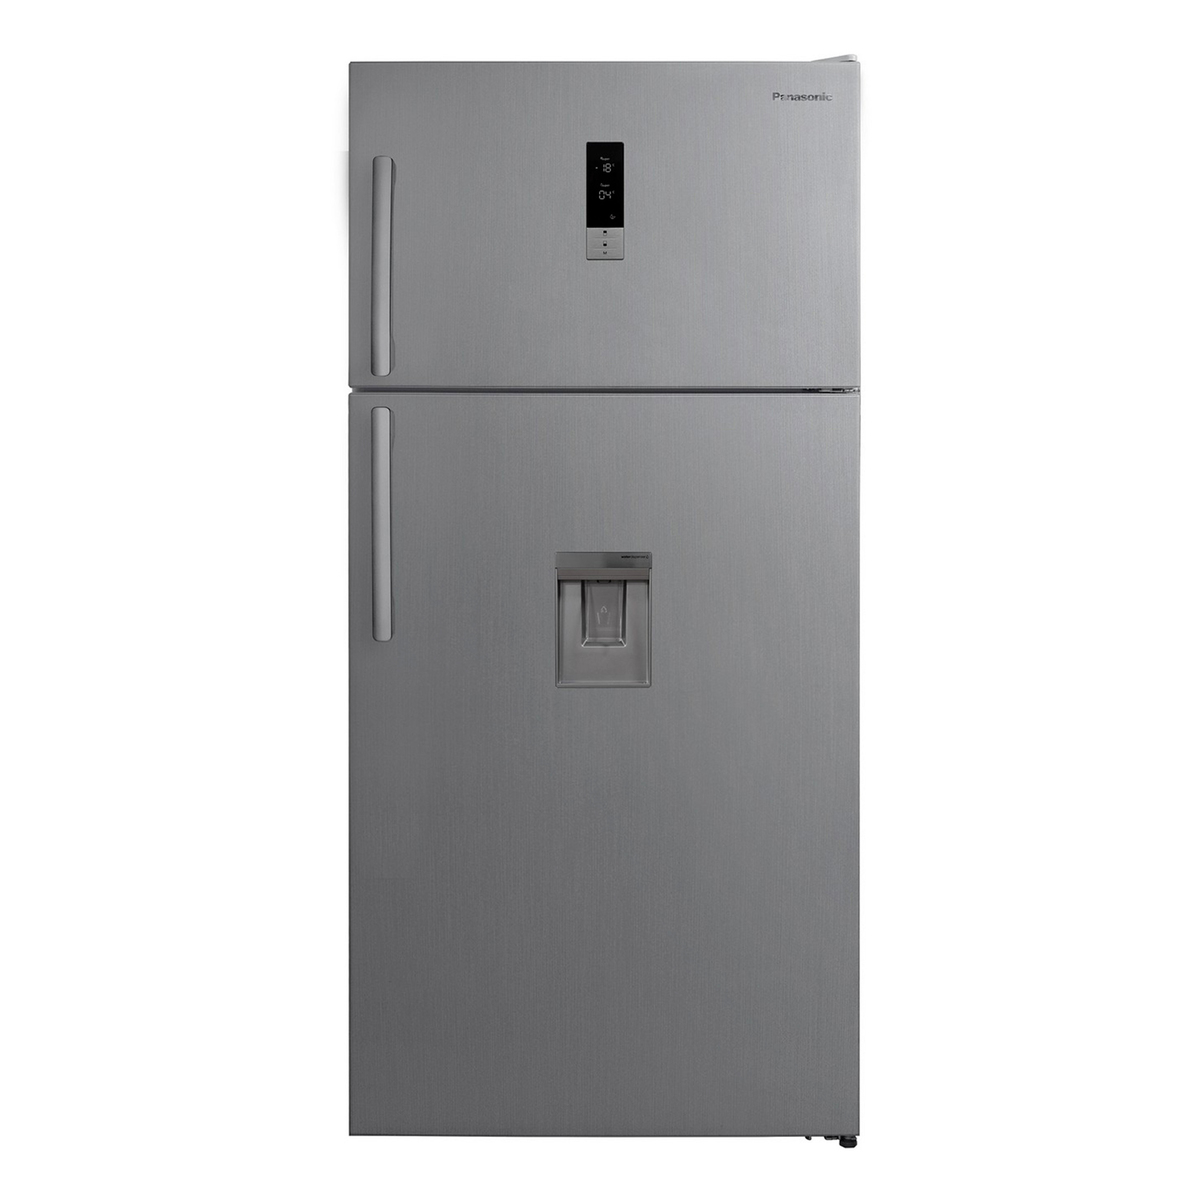 Panasonic Double Door Refrigerator NRBC752DS 575Ltr